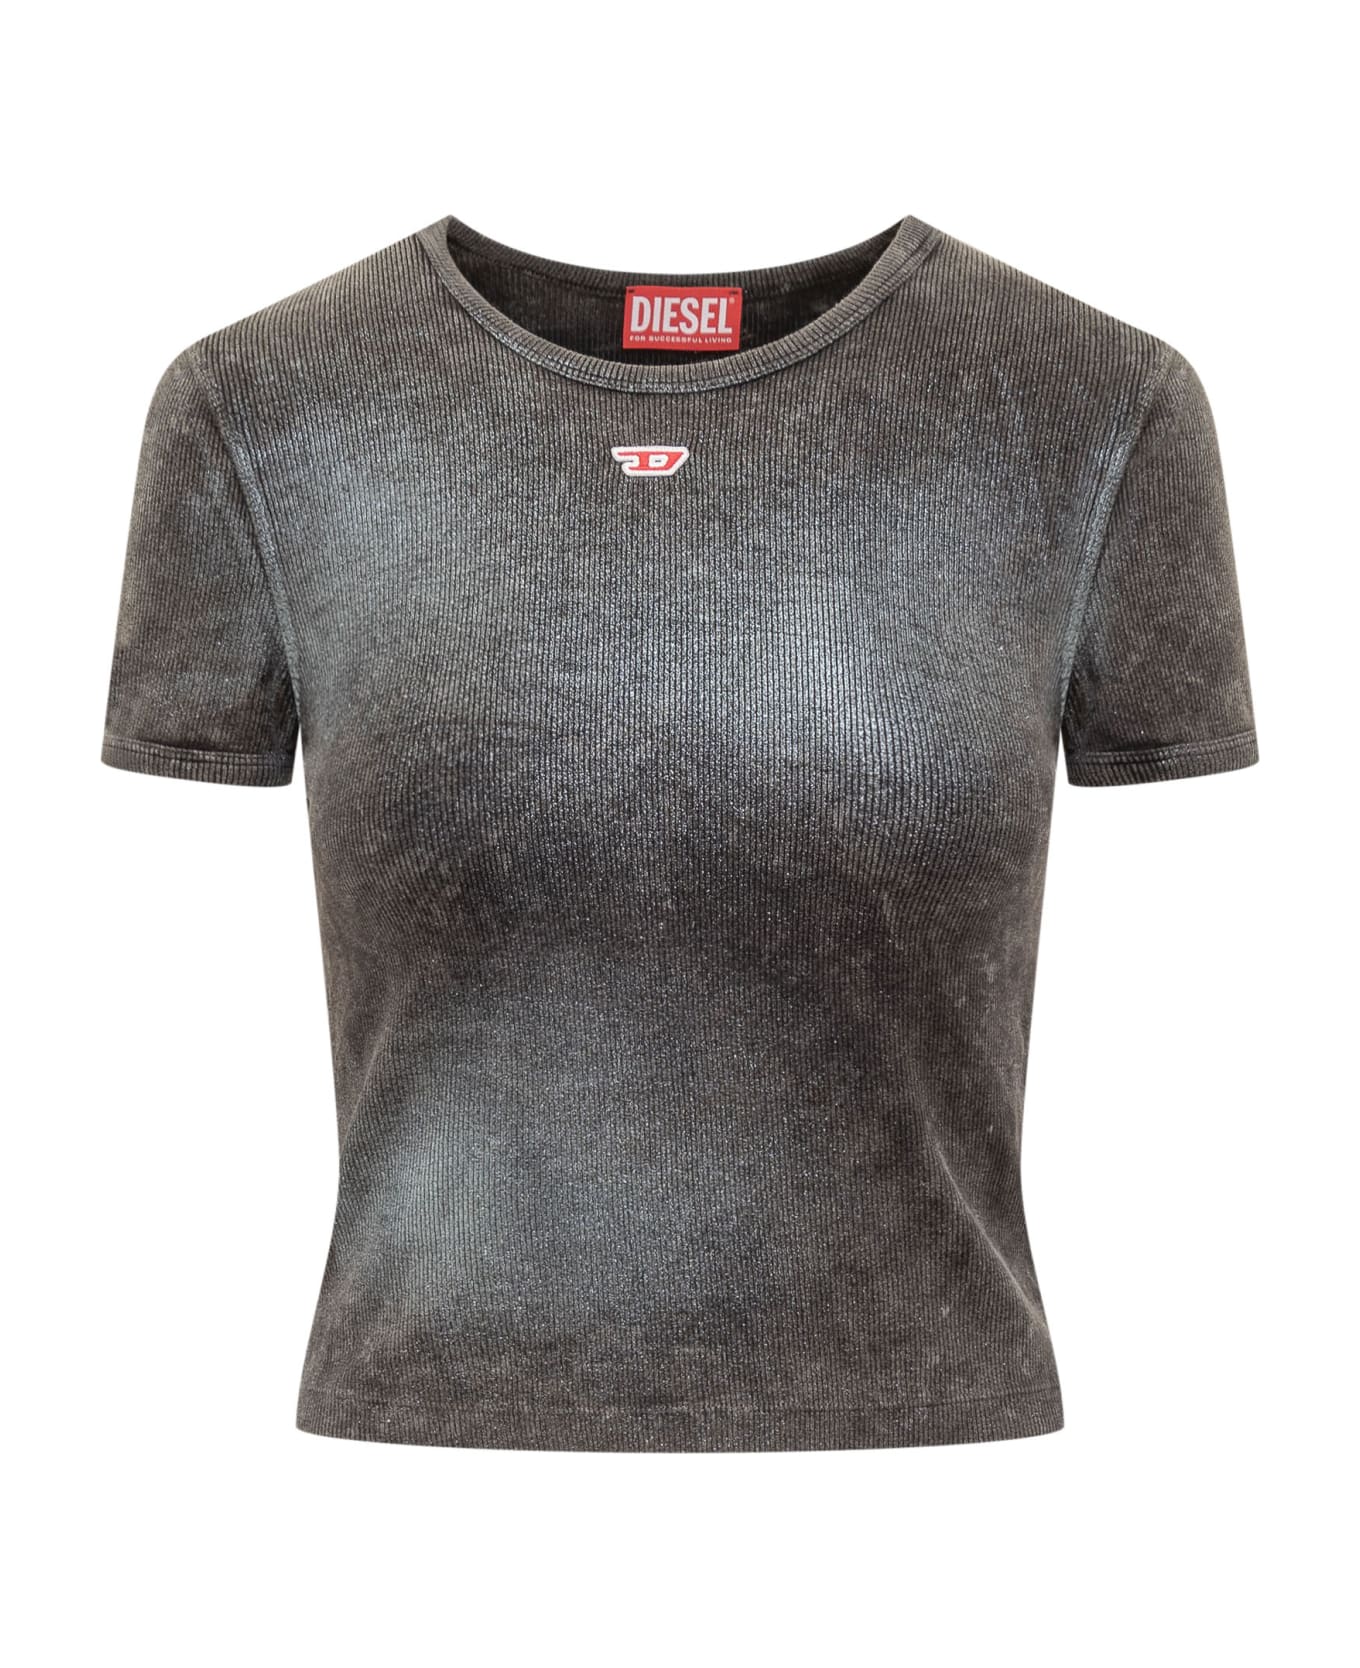 Diesel T-elen1 T-shirt - A Tシャツ